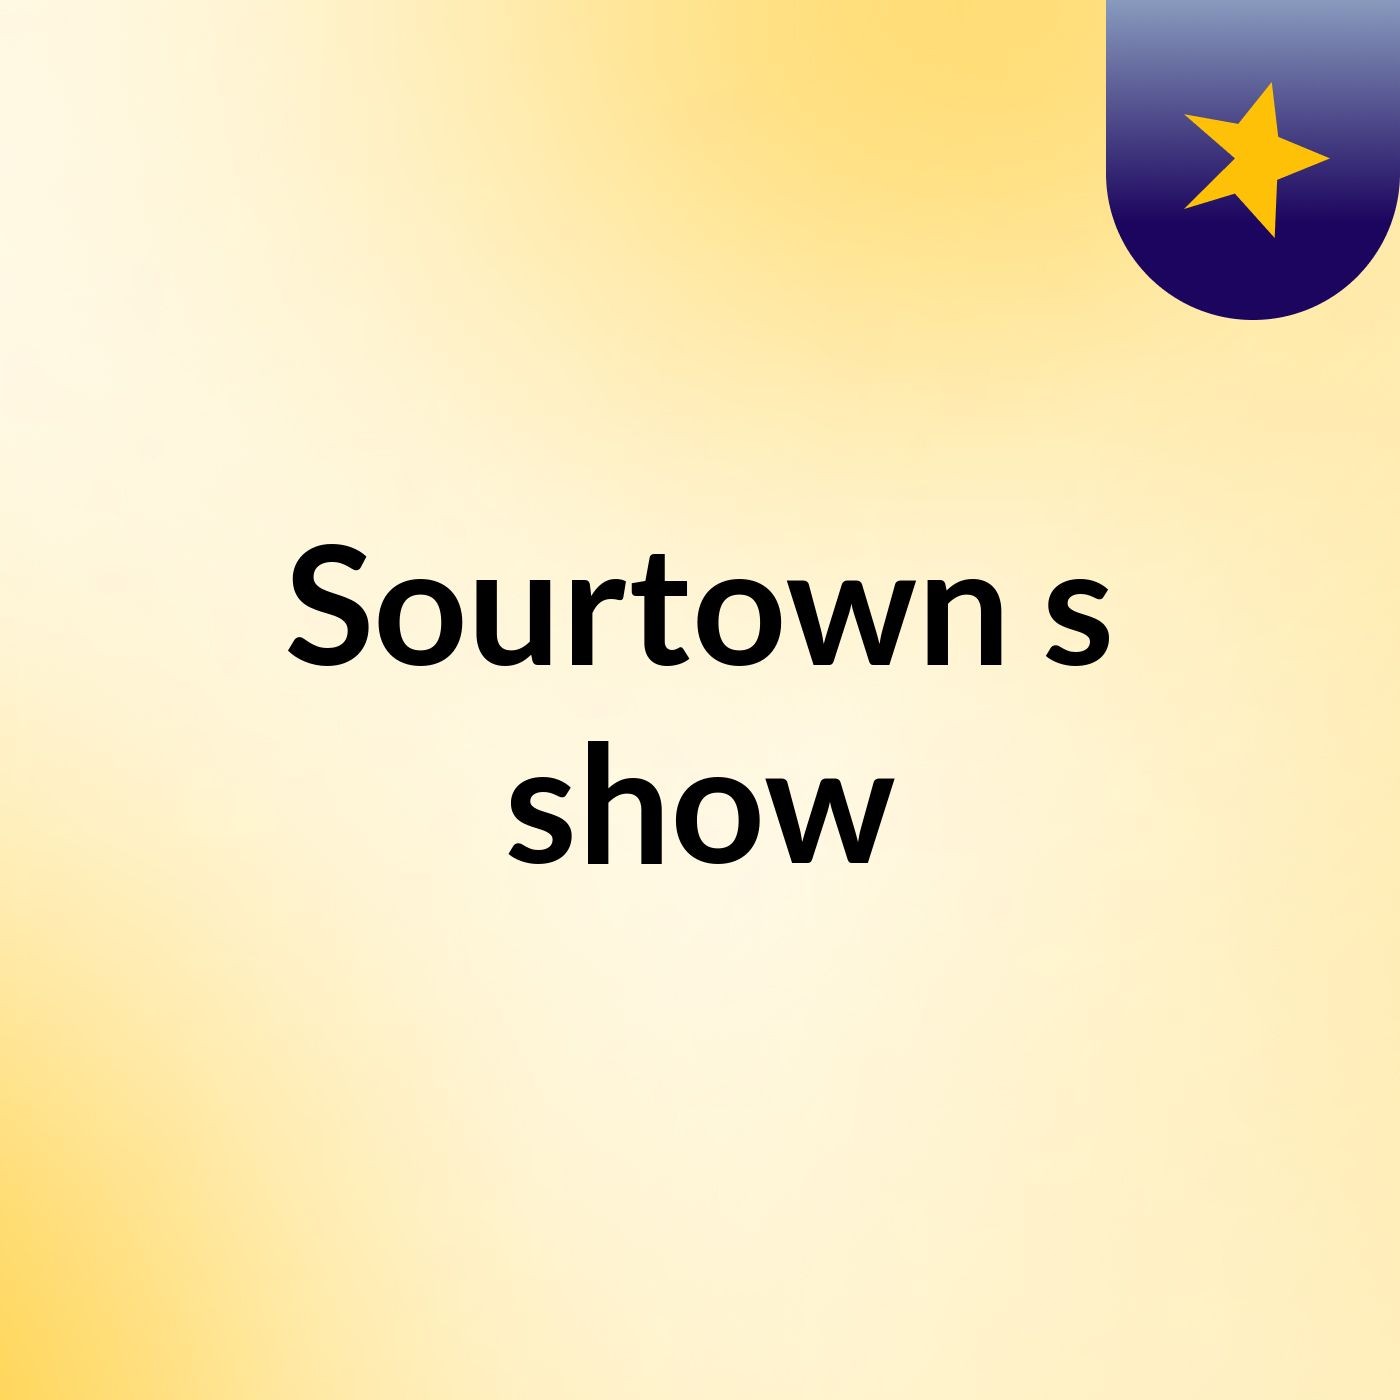 Sourtown's show